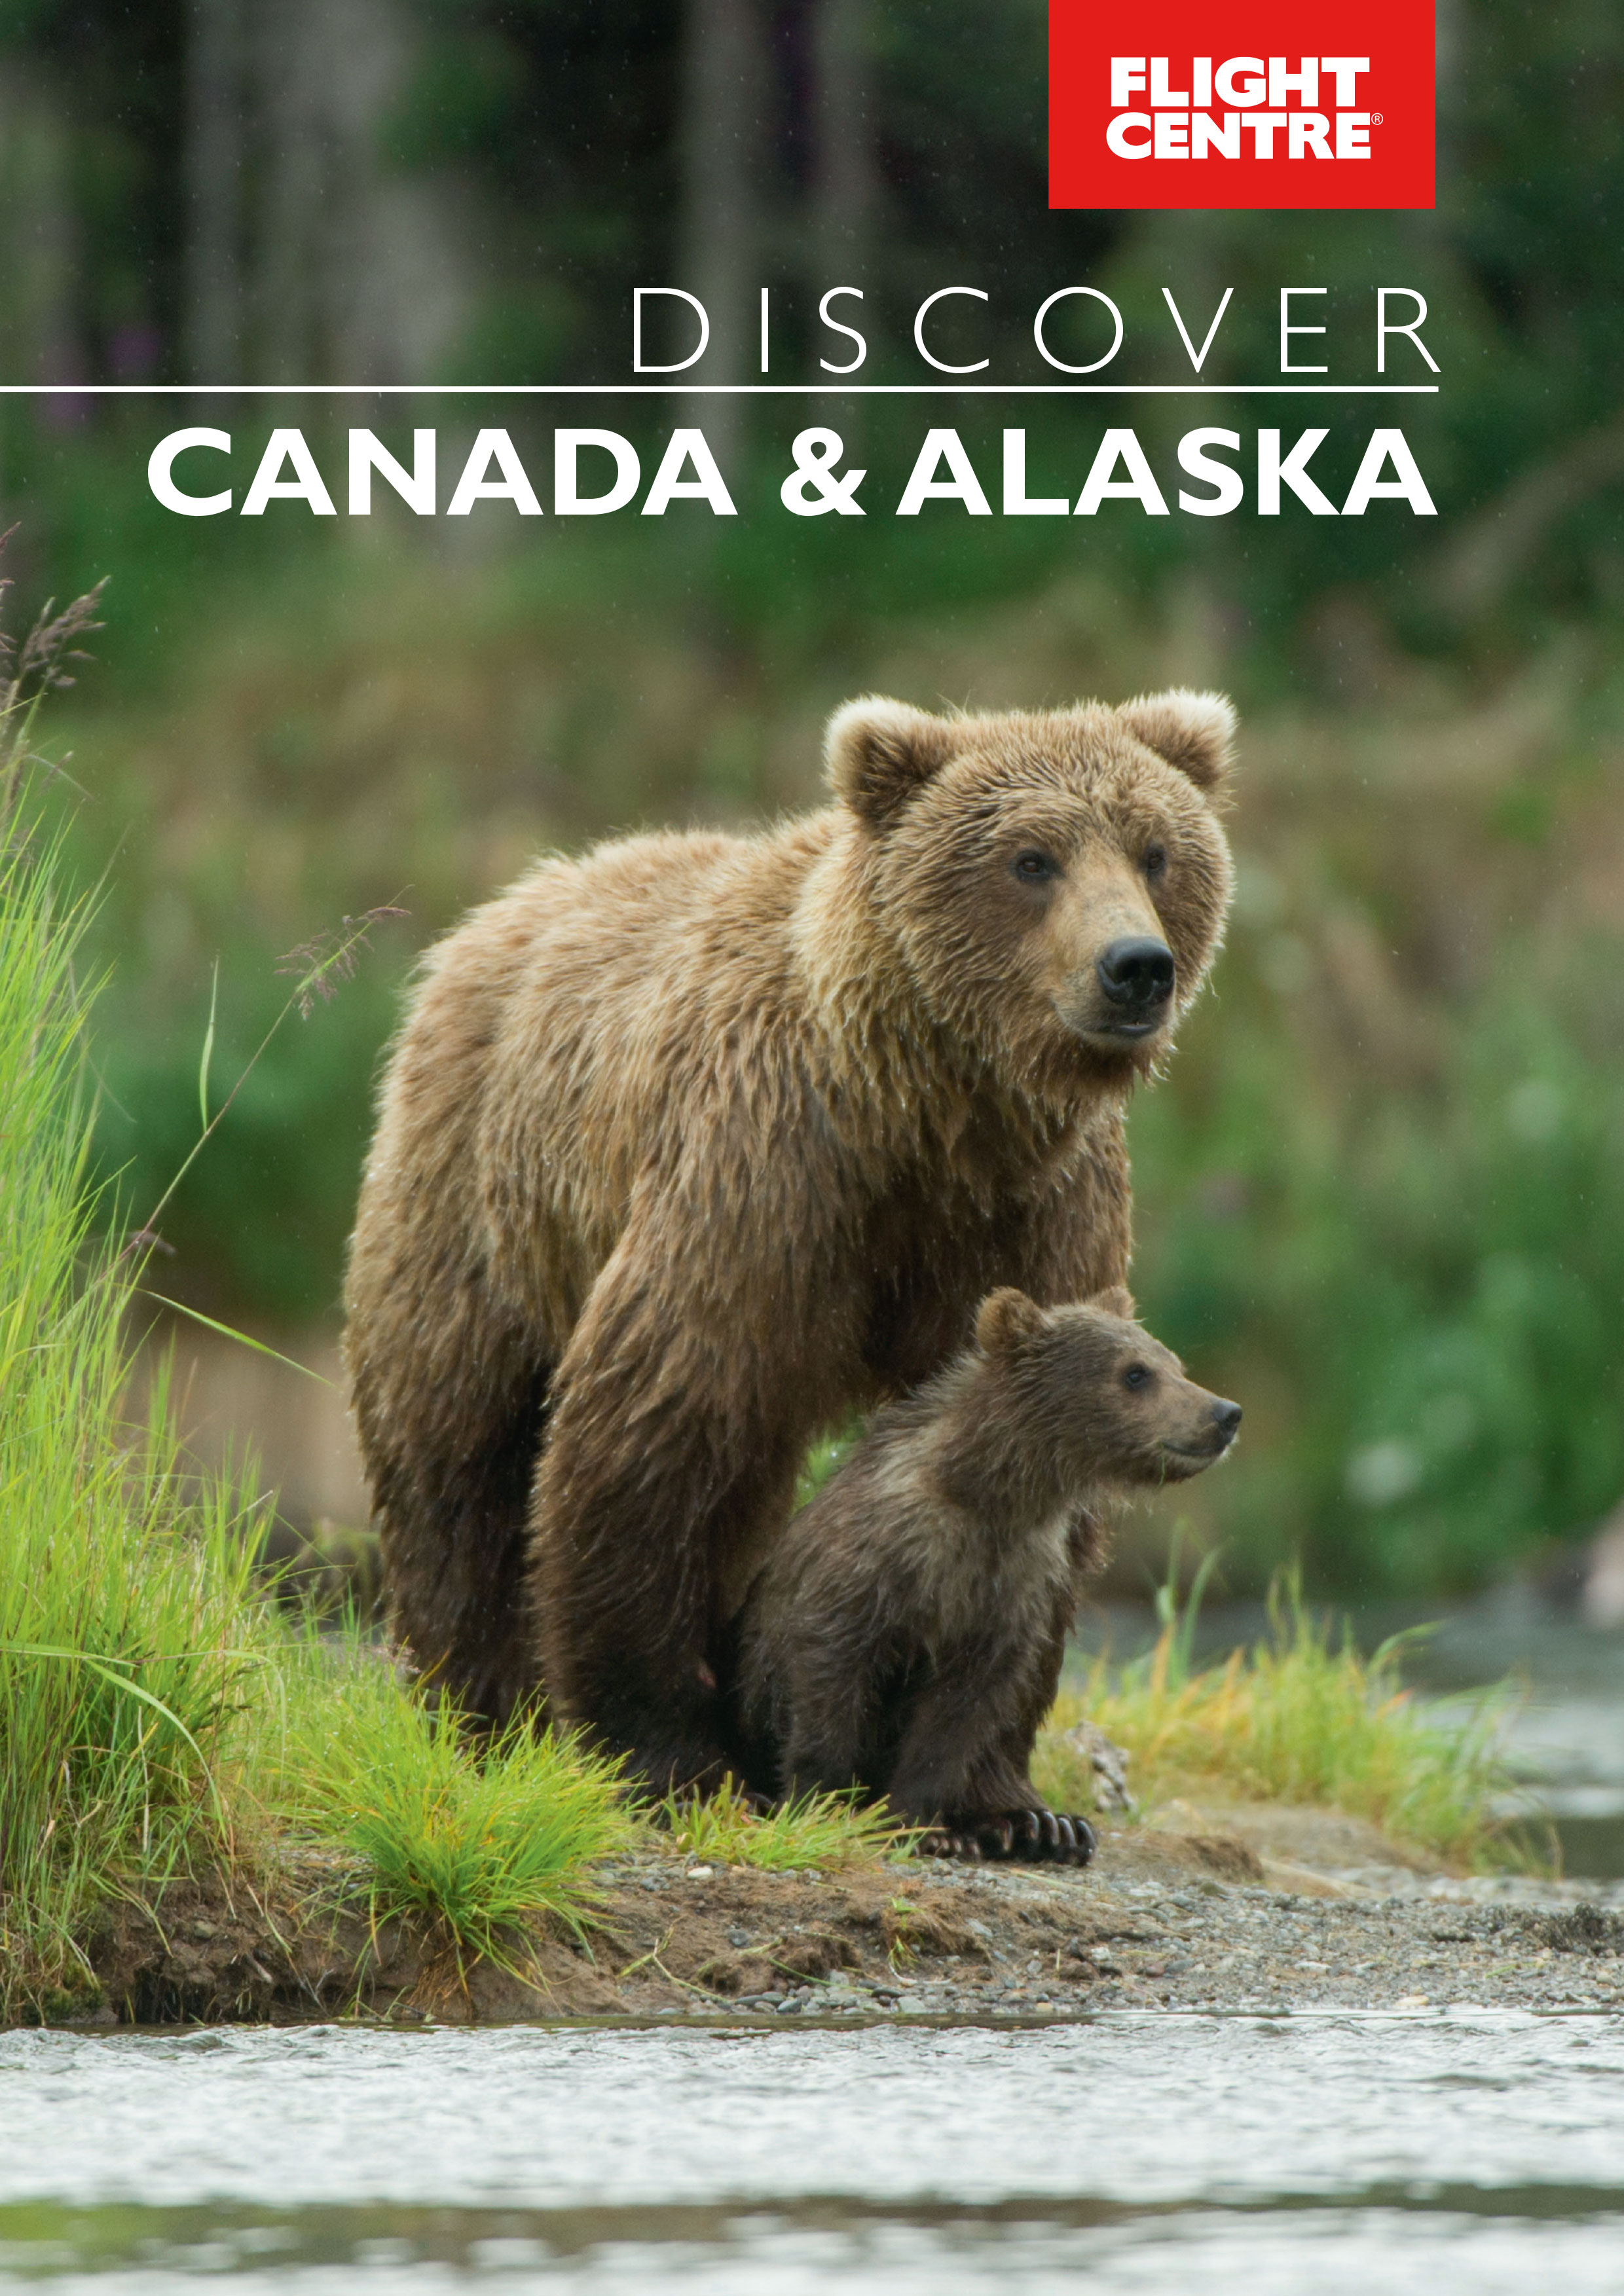 Canada & Alaska brochure